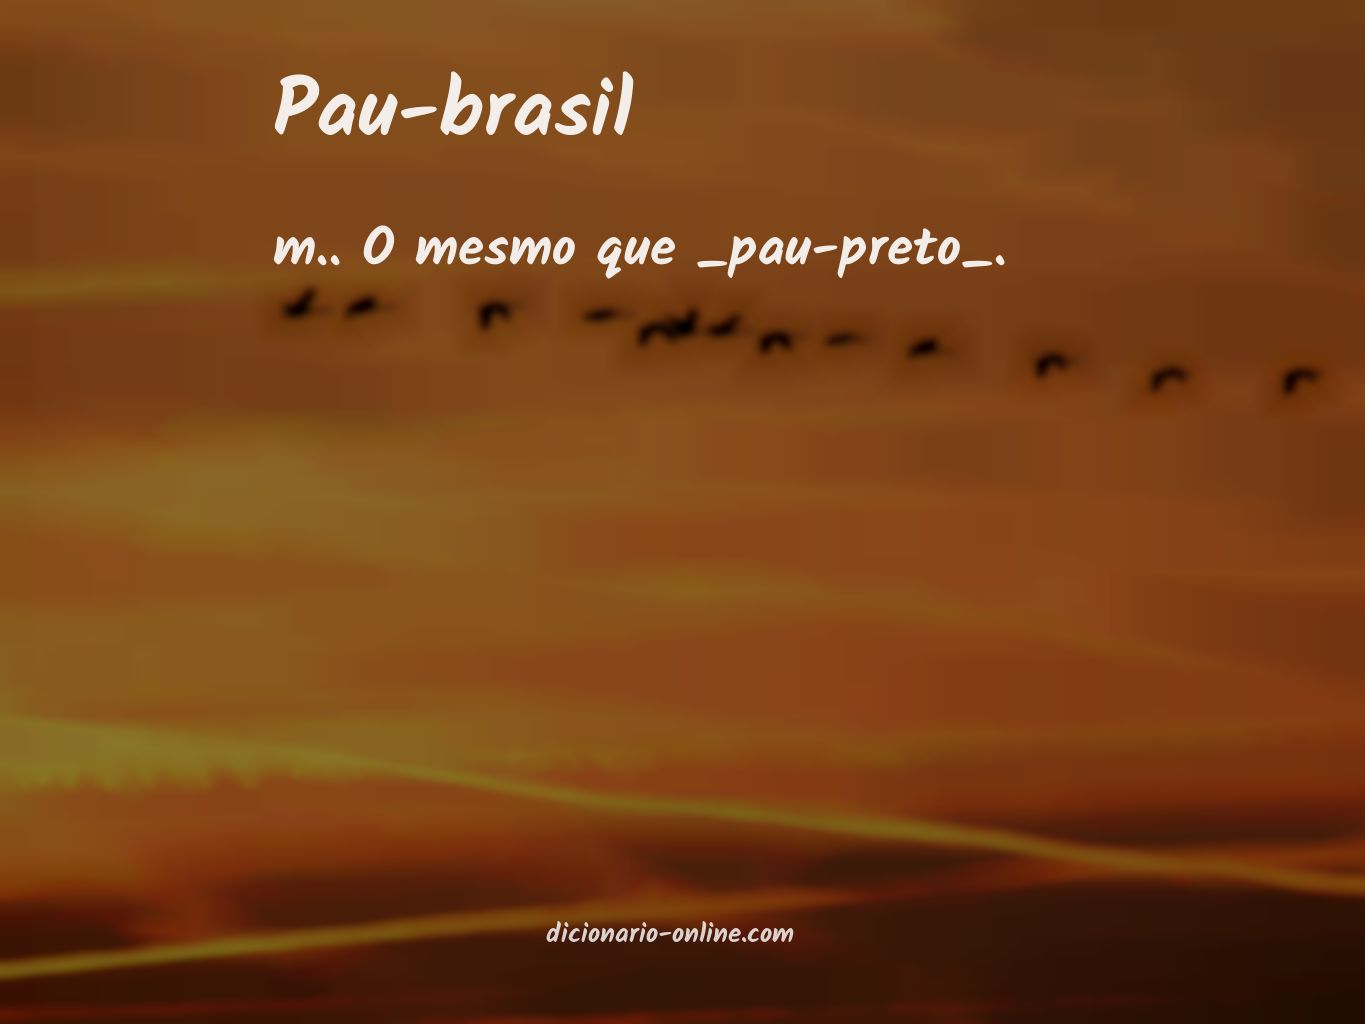 Significado de pau-brasil